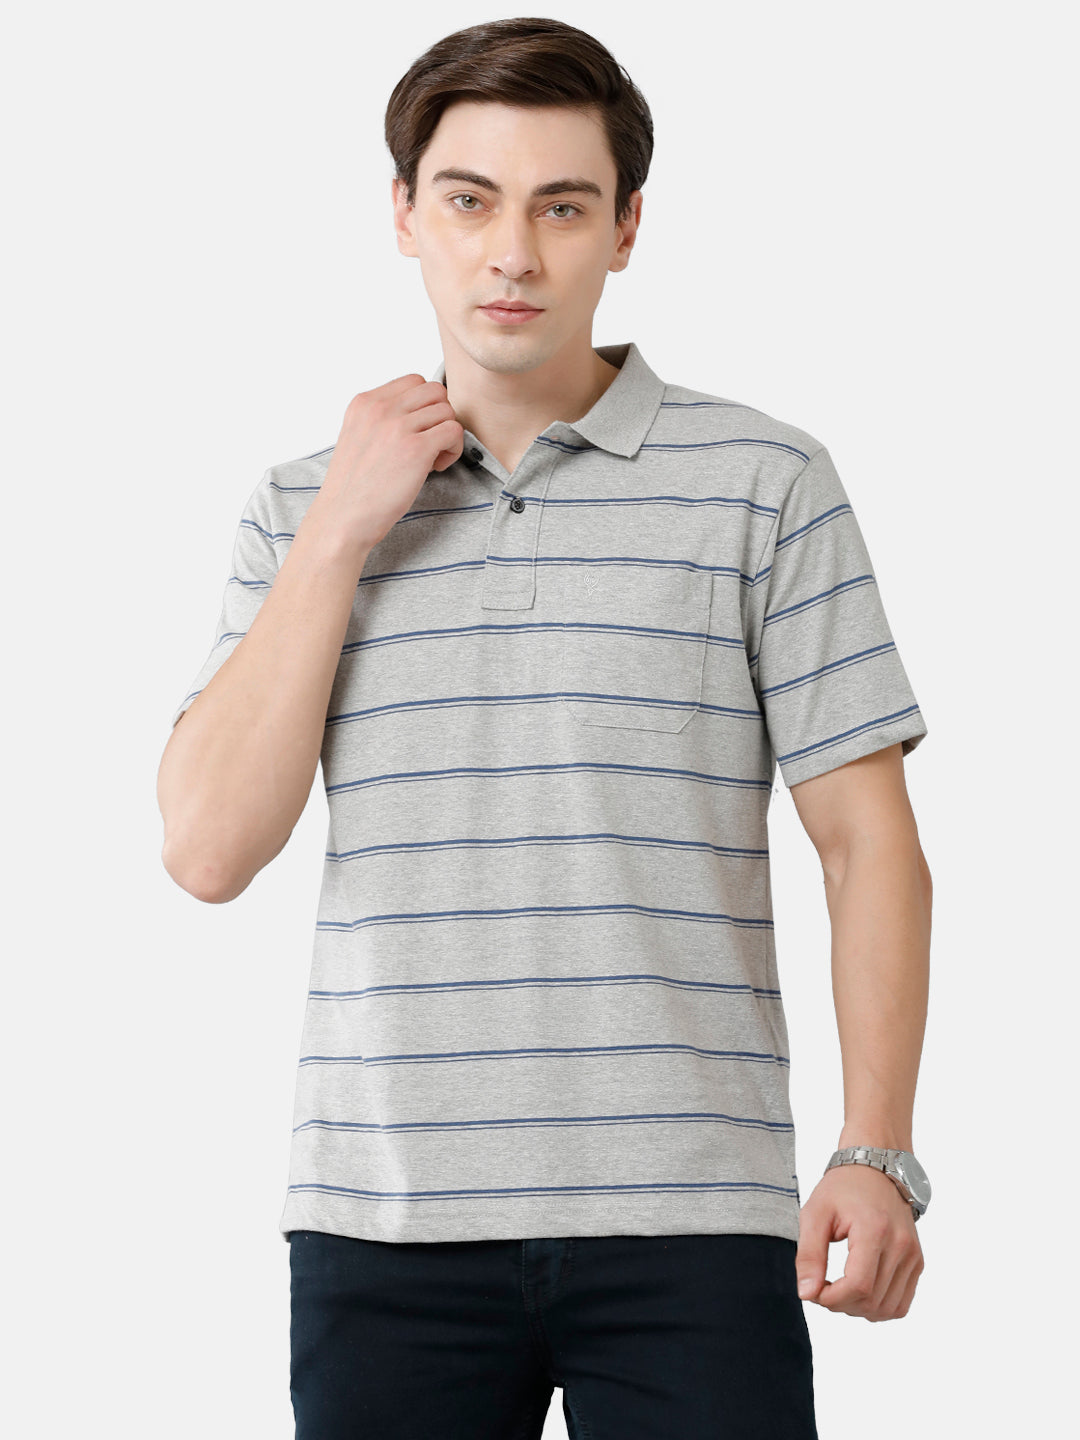 Classic Polo Mens Cotton Blend Striped Authentic Fit Polo Neck Grey Color T-Shirt | Avon 479 A